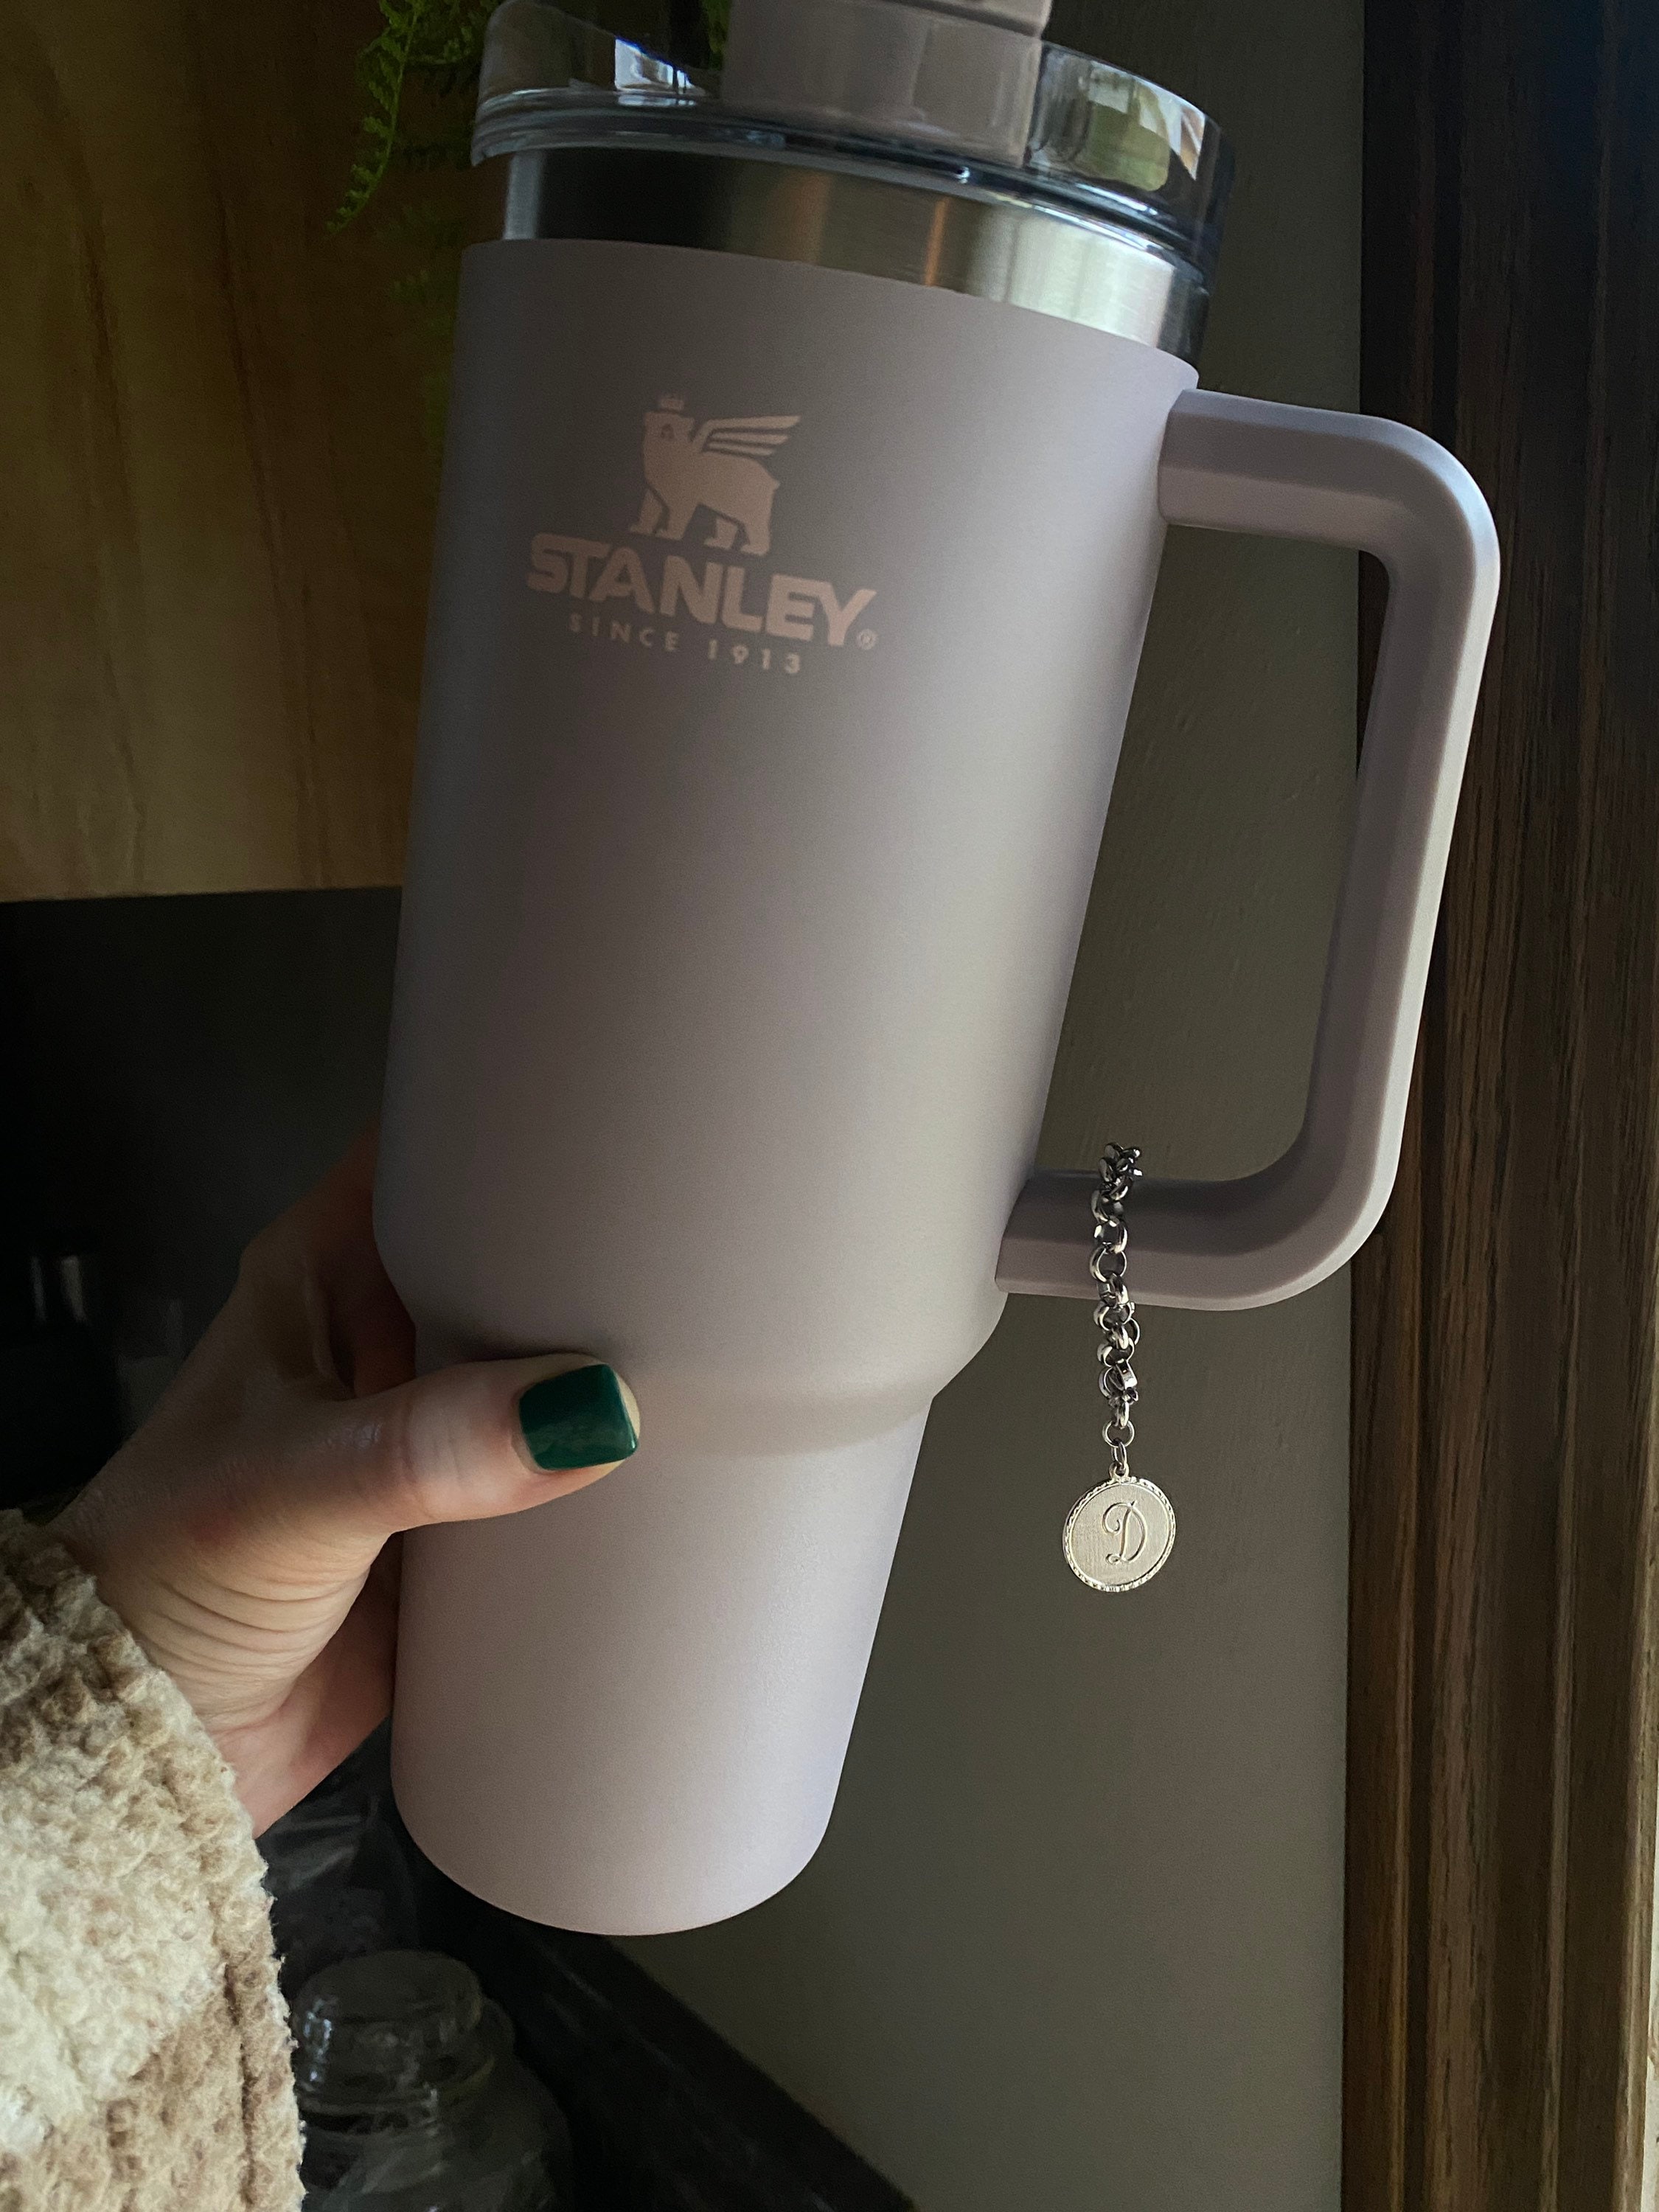  MOTAIN Letter Charm Accessories For Stanley Cup,Name Id Letter  Handle Charm For Stanley Tumbler,Water Cup Handle Identification Letter  Charm(D) : Home & Kitchen